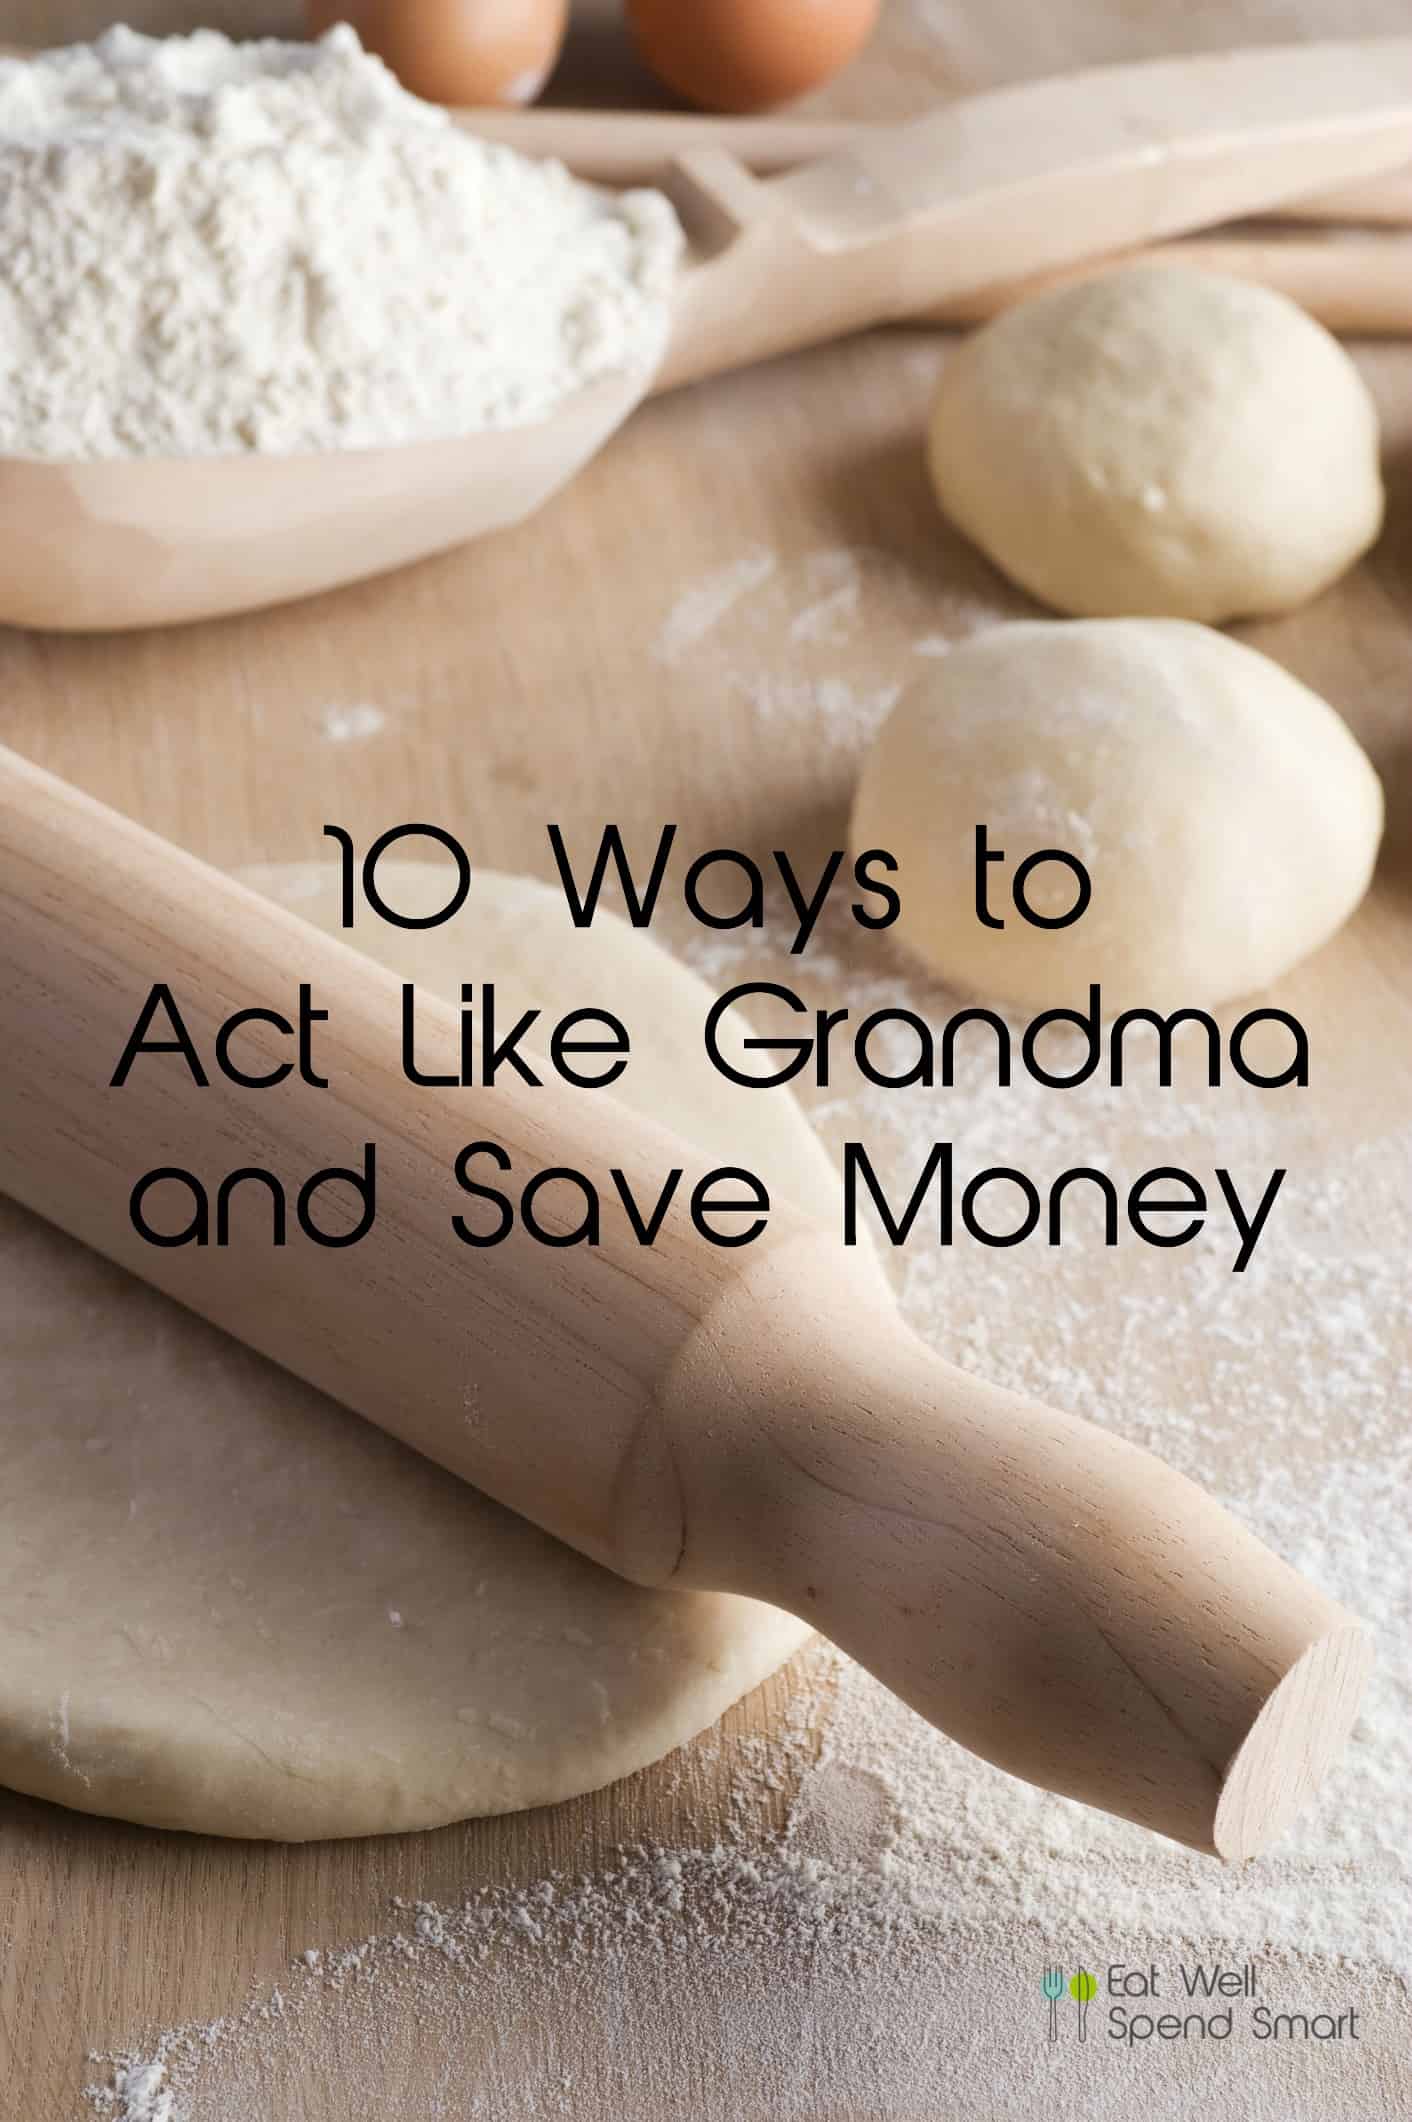 10 ways to act like Grandma and save money.